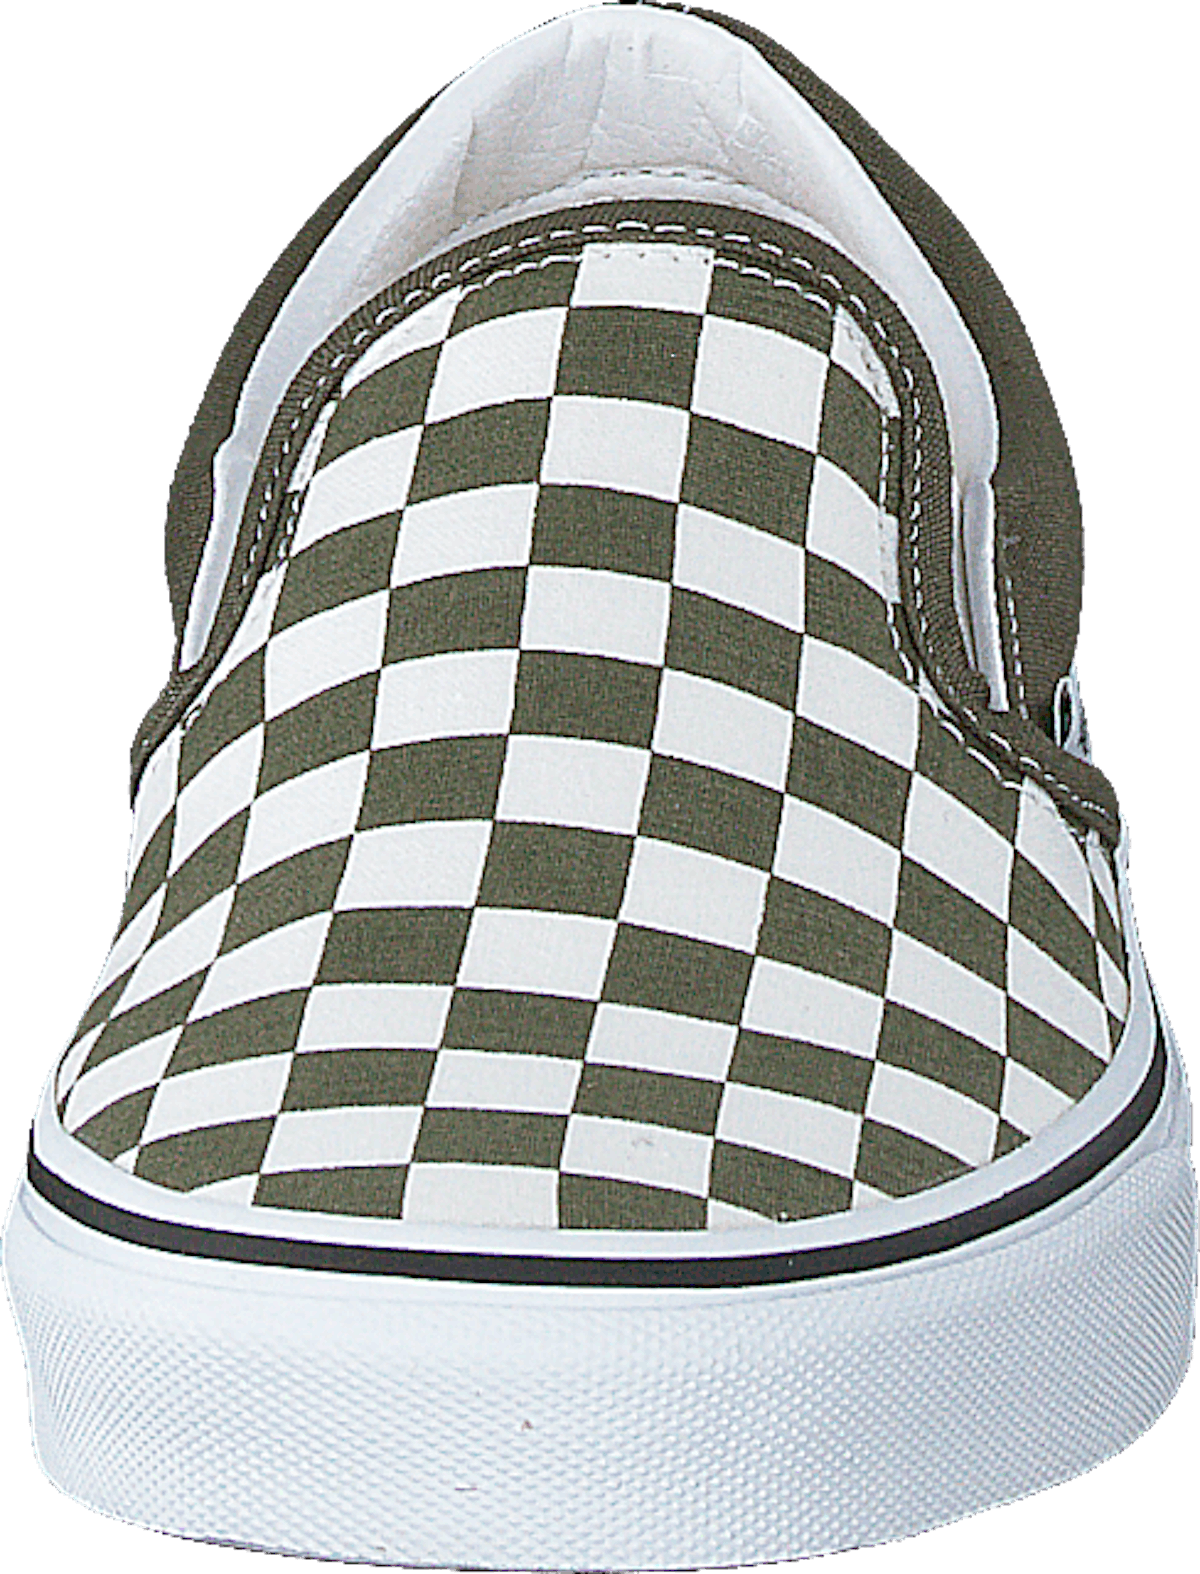 Ua Classic Slip-on (checkerboard) Grape Leaf/wht